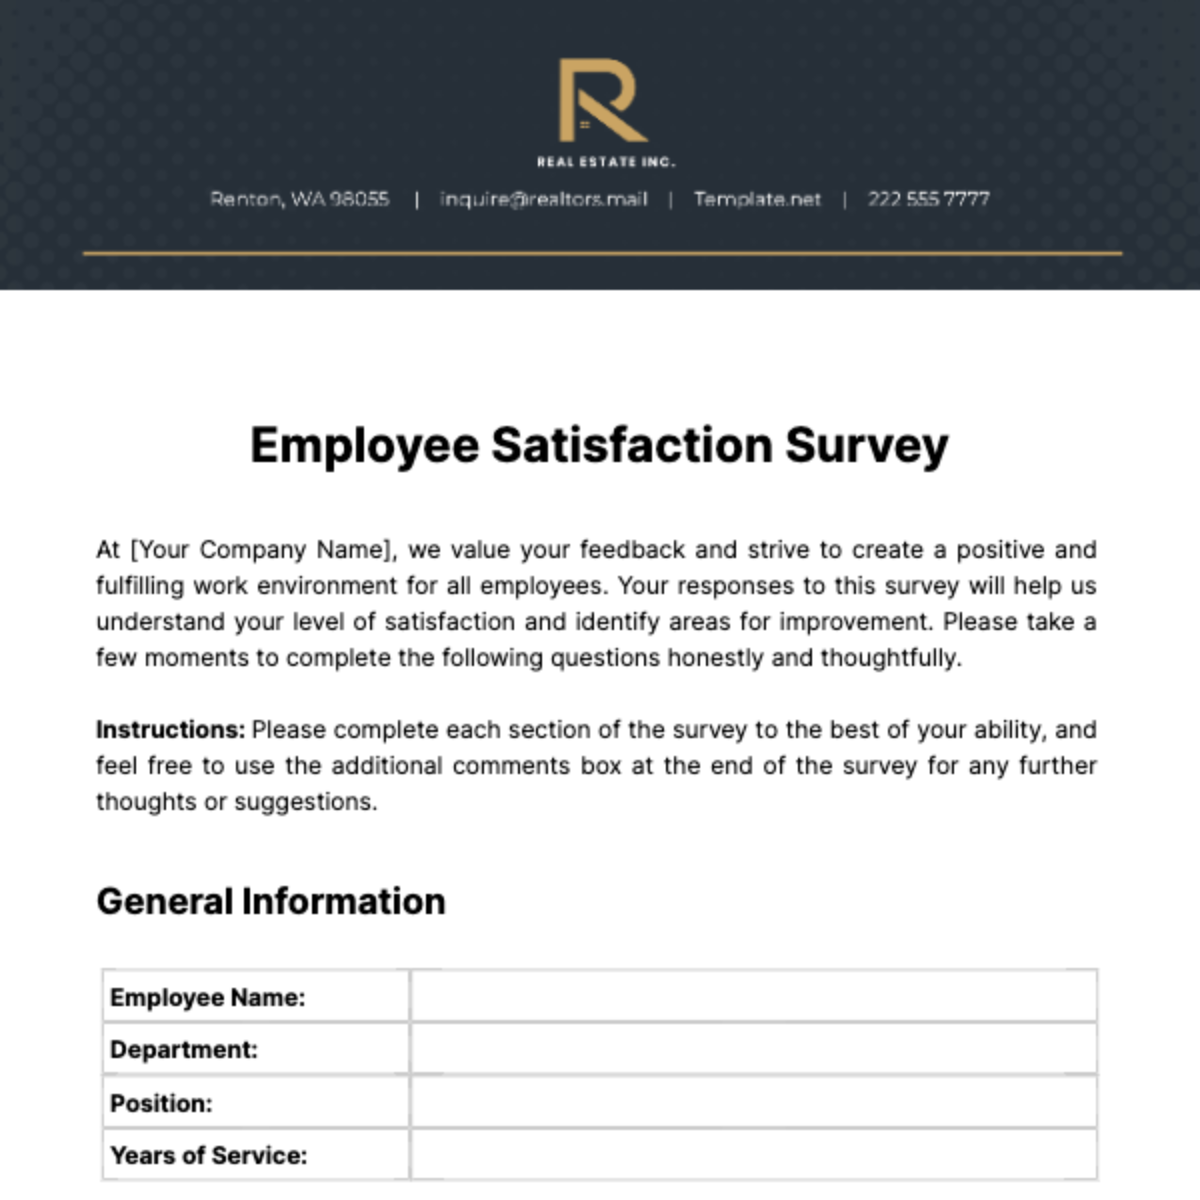 Free Real Estate Employee Satisfaction Survey Template